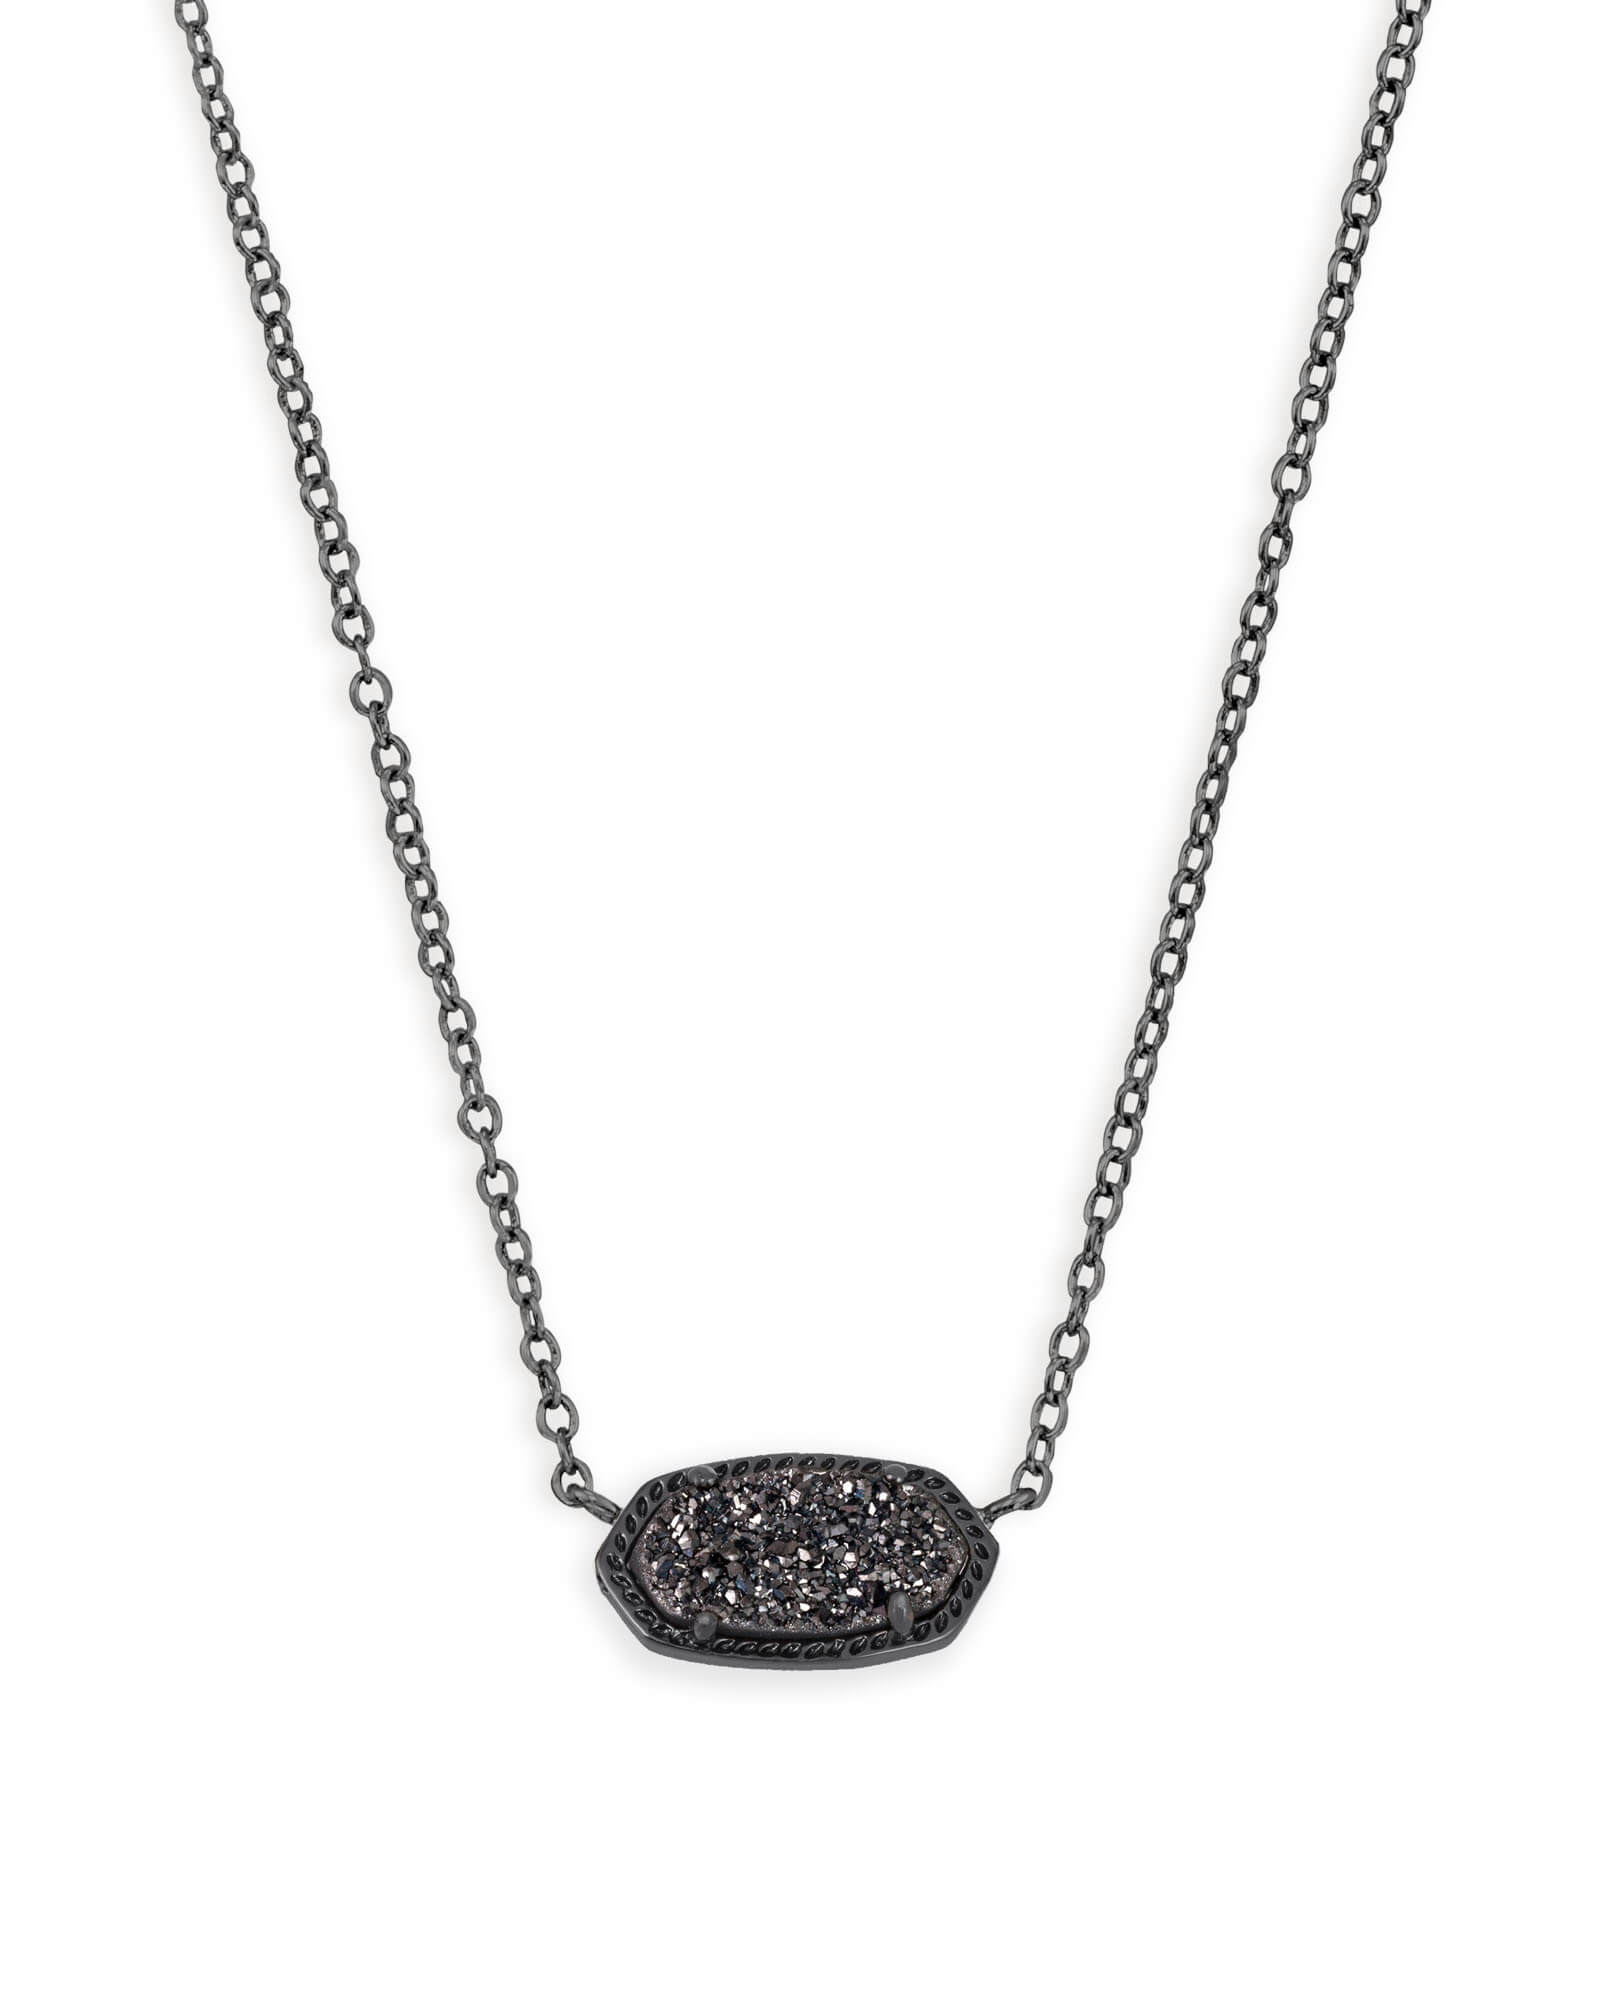 Kendra Scott Elisa Pendant Necklace in Black | Drusy